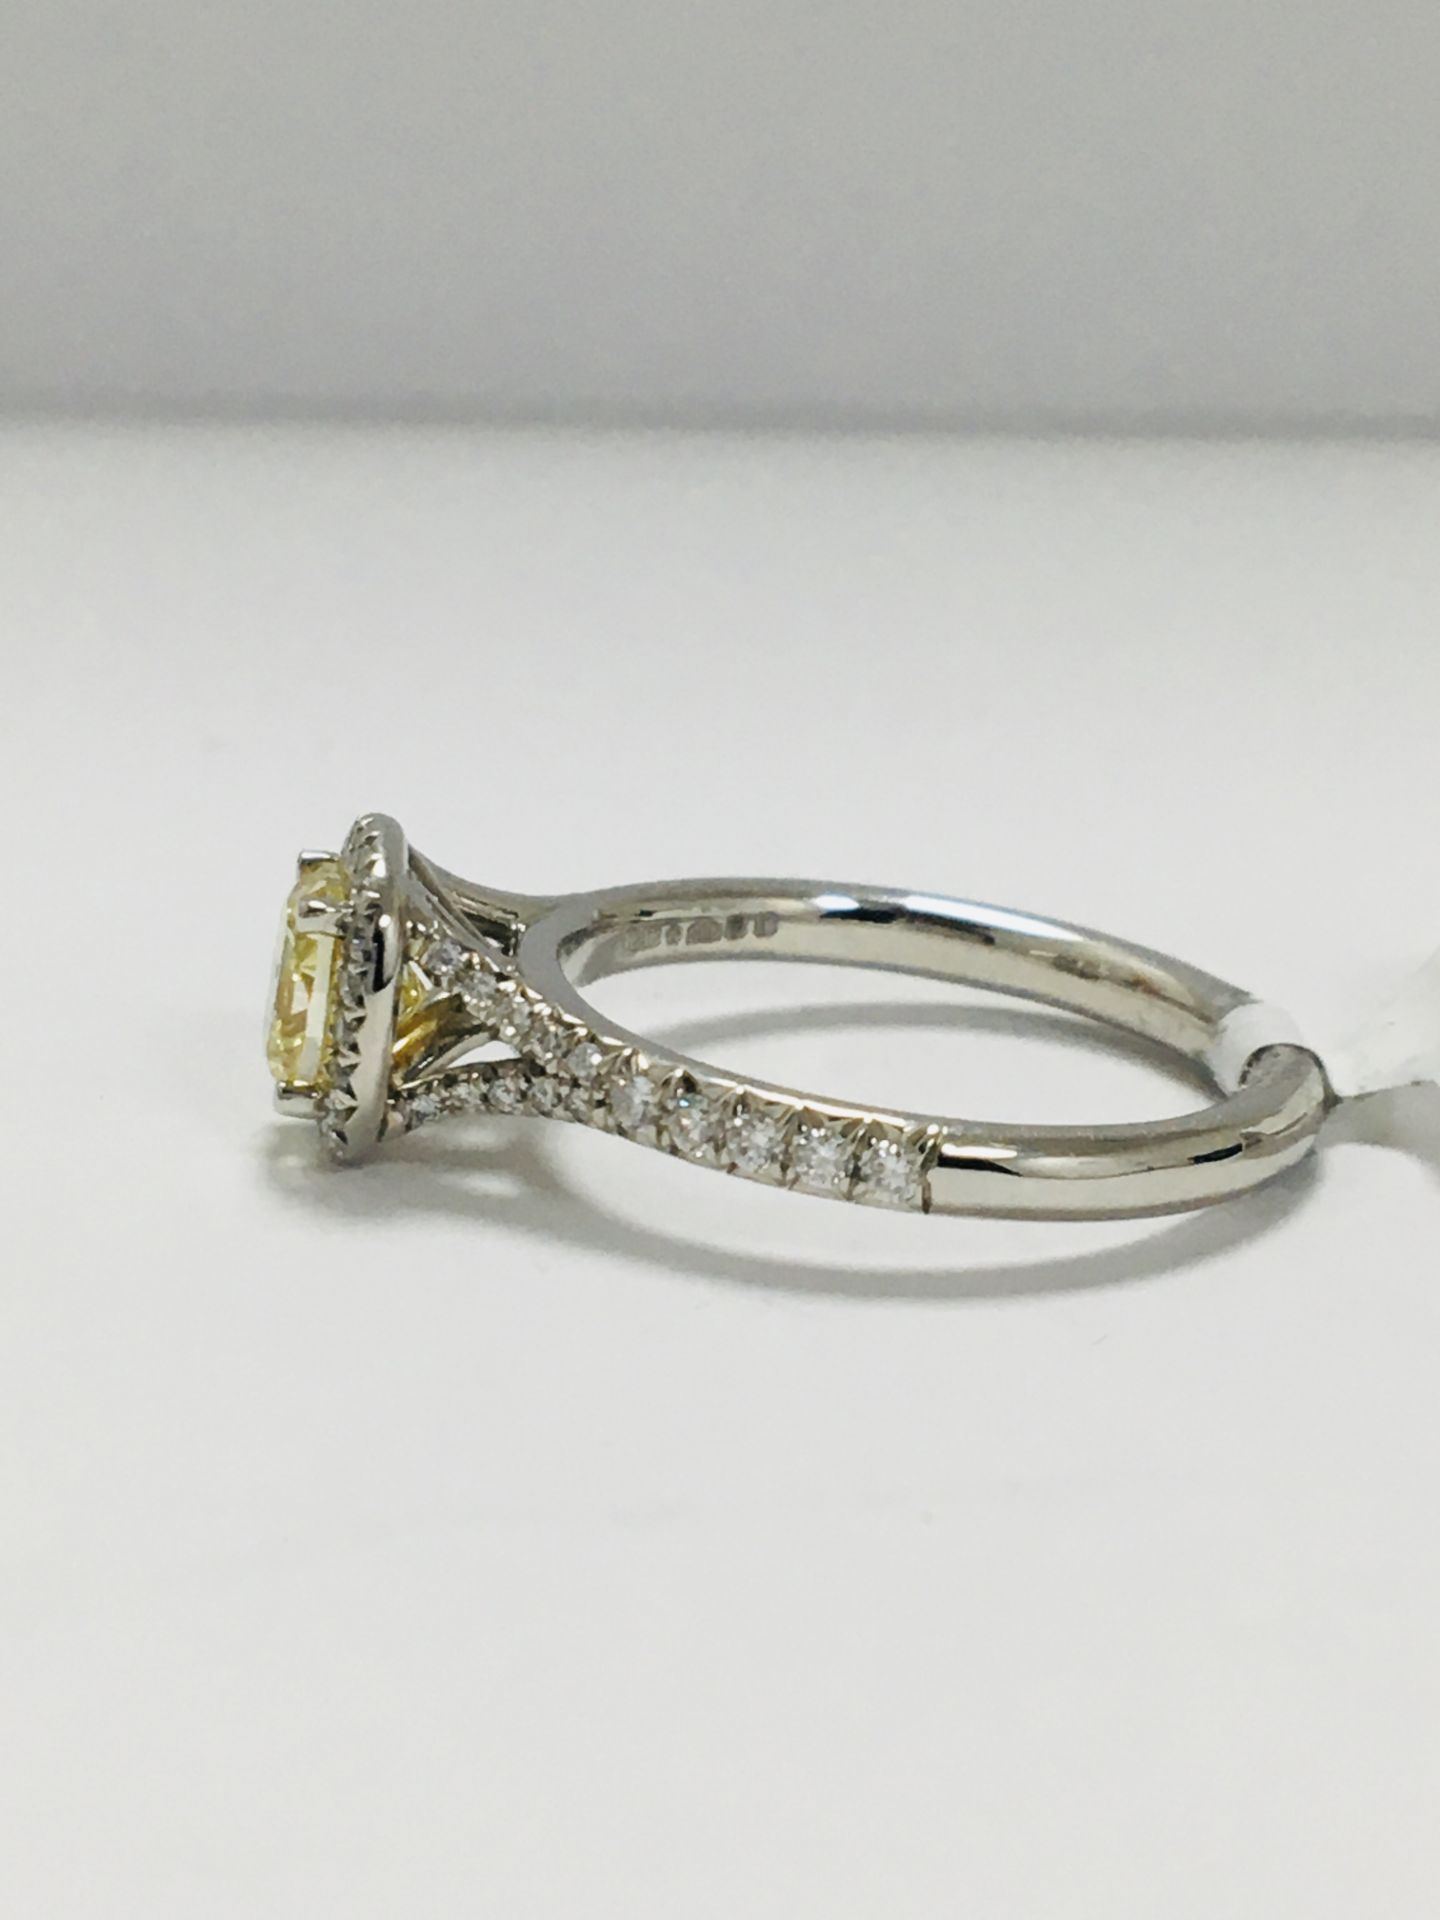 18Ct White Gold Diamond Ring - Image 2 of 6